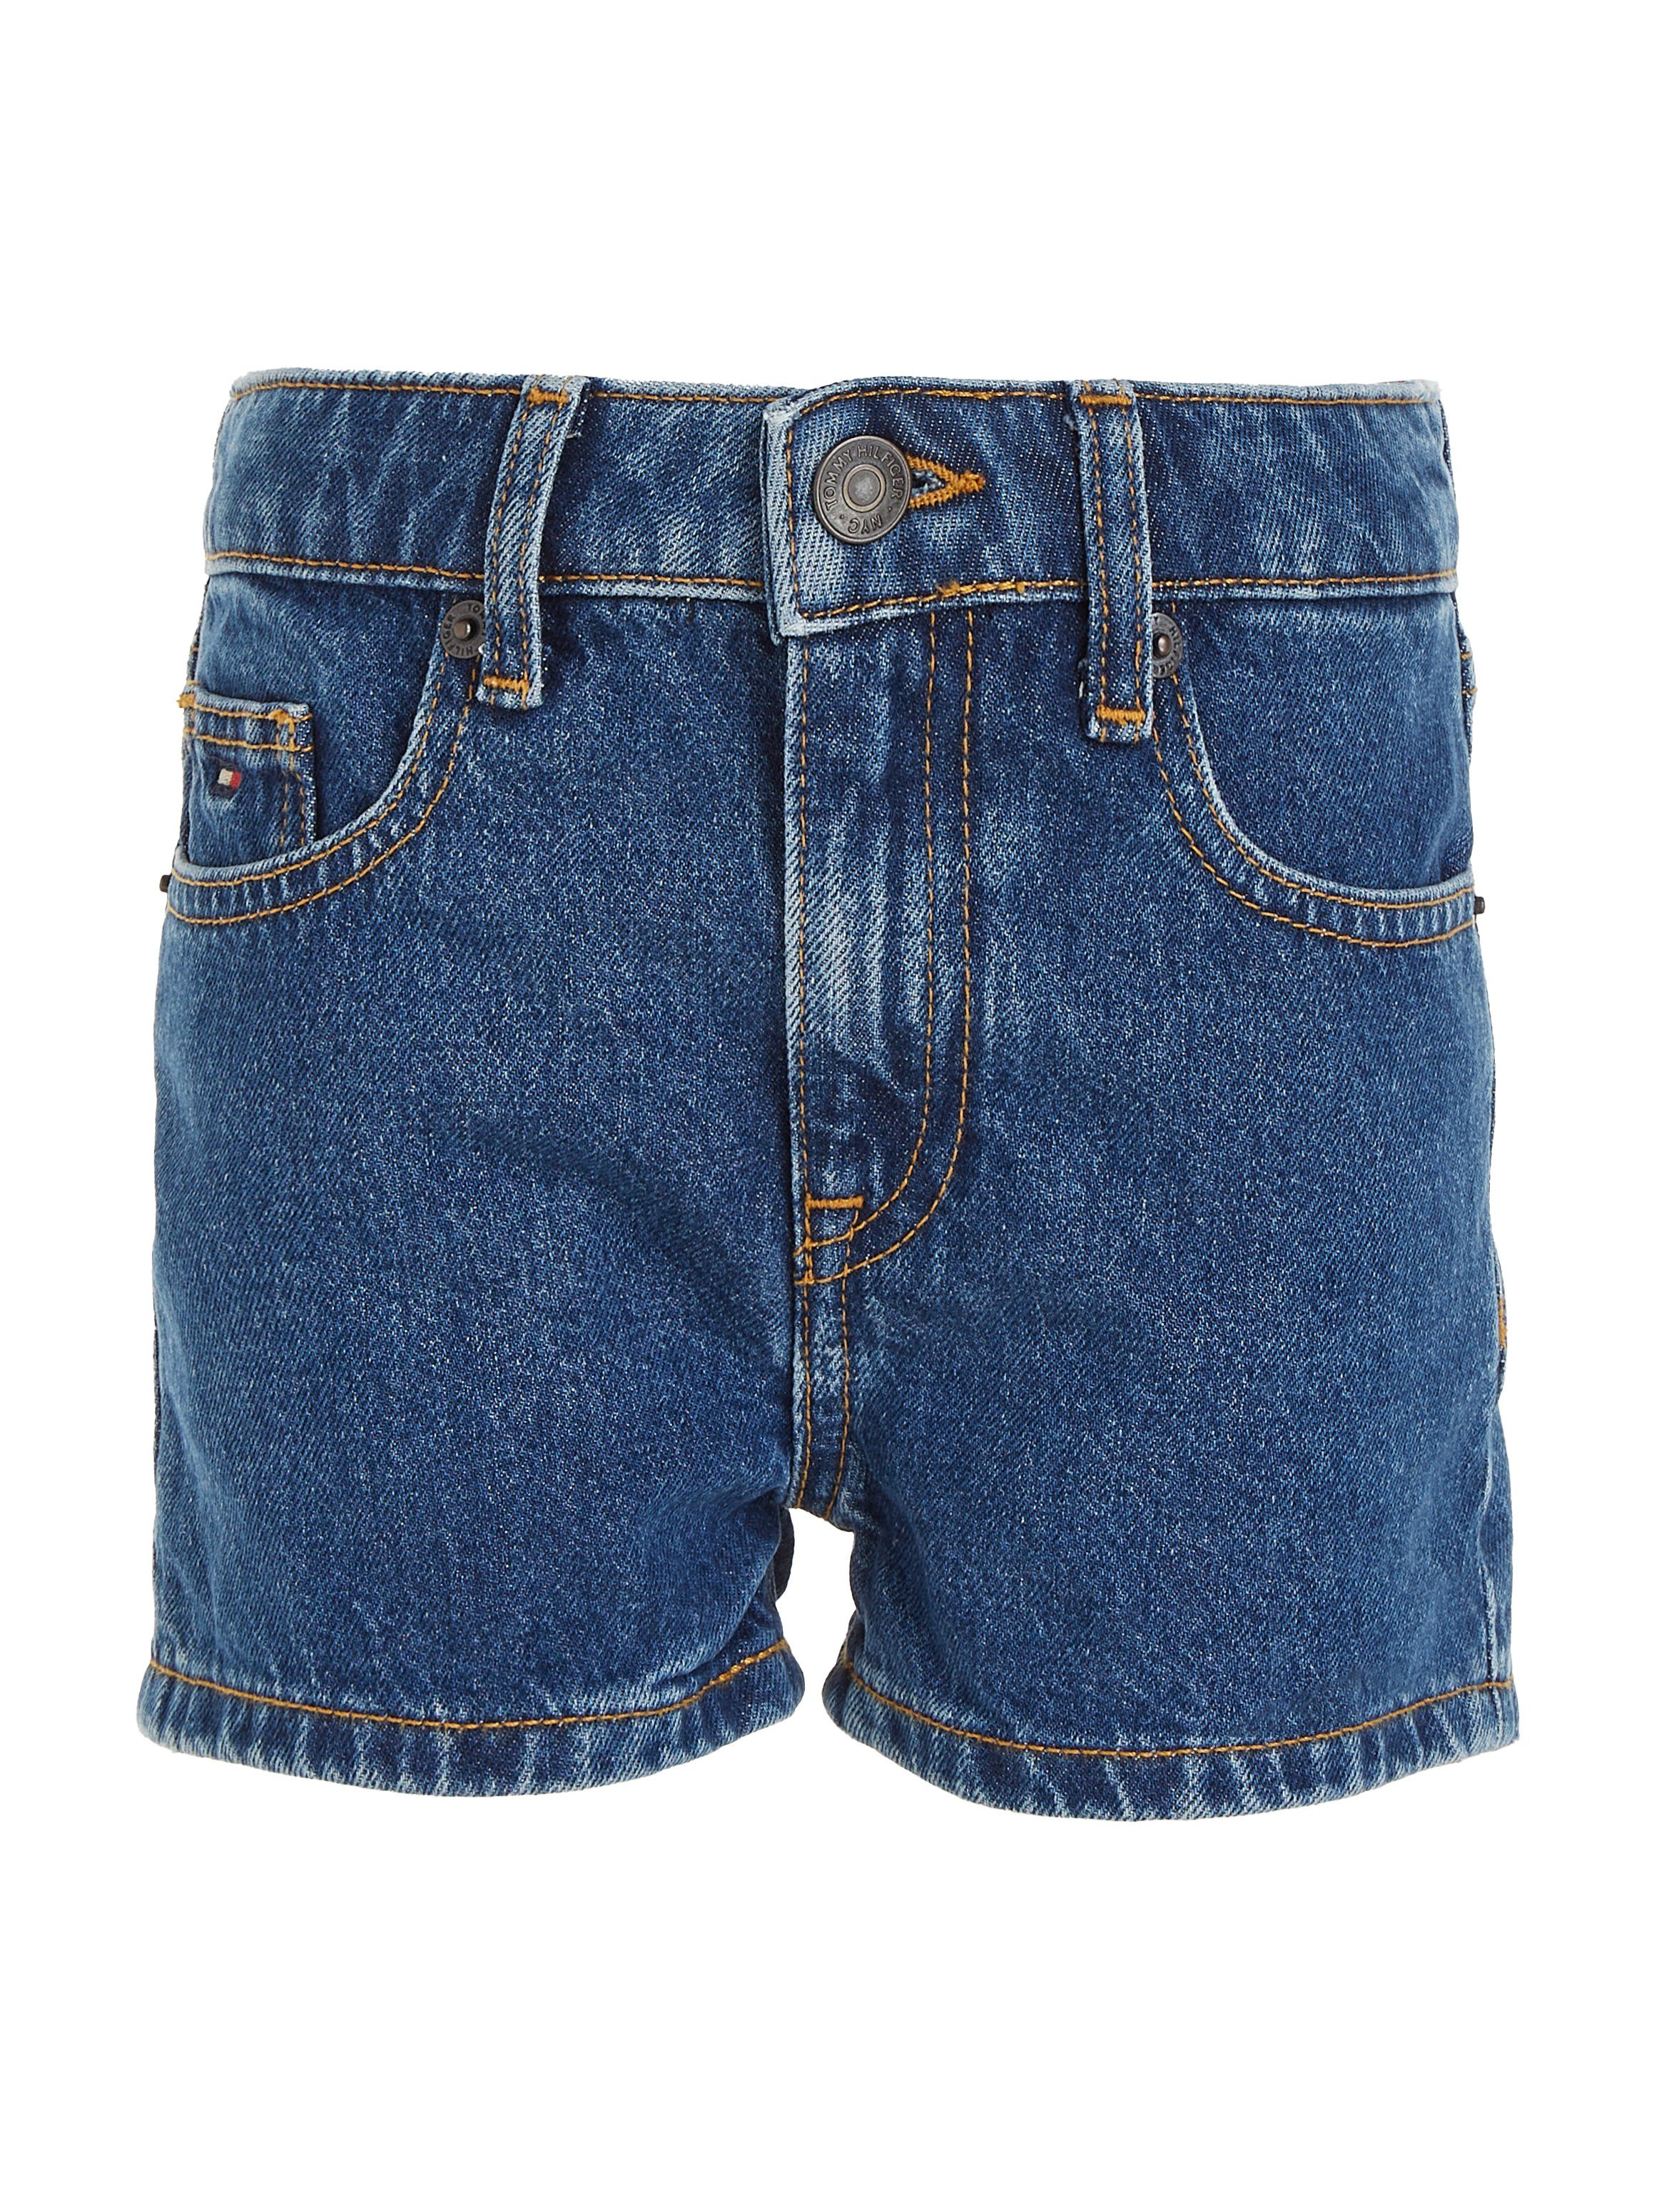 Tommy Hilfiger Shorts GIRLFRIEND MID BLUE SHORTS mit Tommy Hilfger Logo-Badge | Shorts